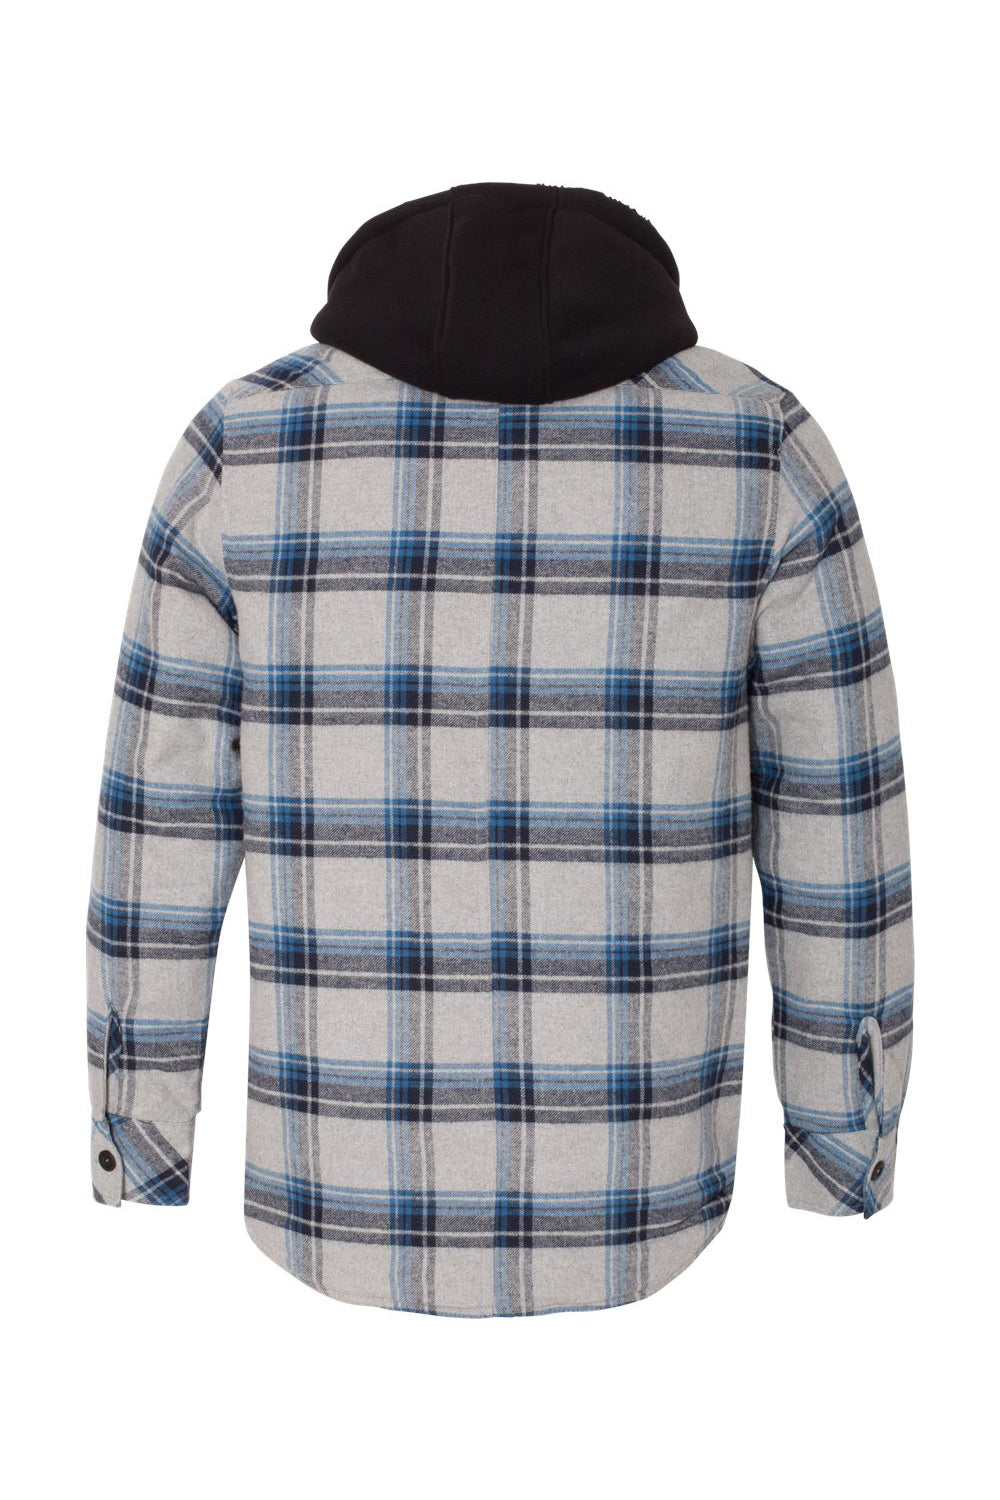 Burnside 8620 Mens Quilted Flannel Full Zip Hooded Jacket Grey/Blue Flat Back